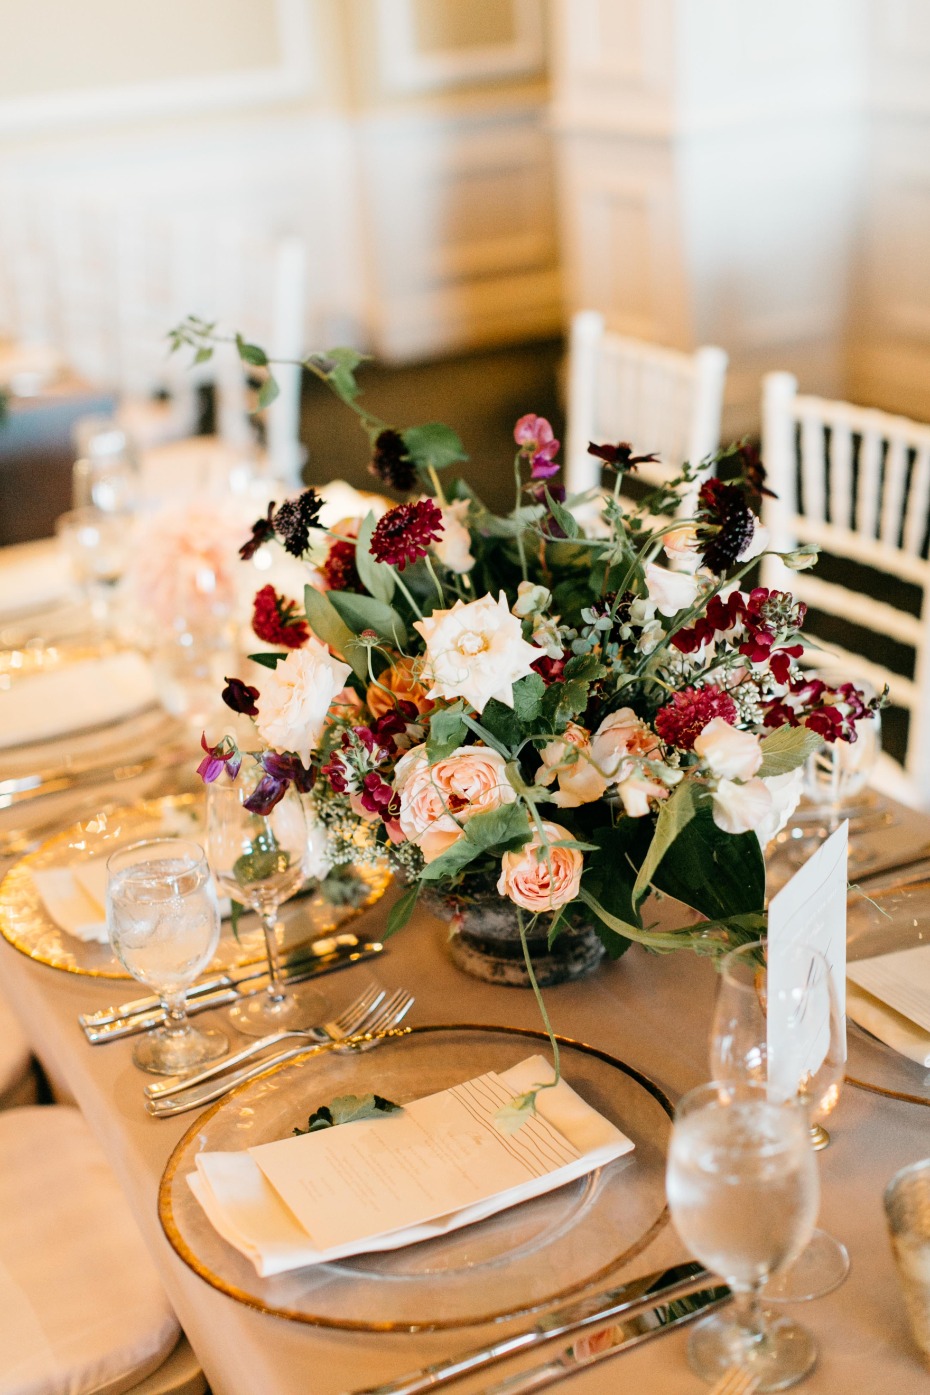 classic and elegant wedding table decor